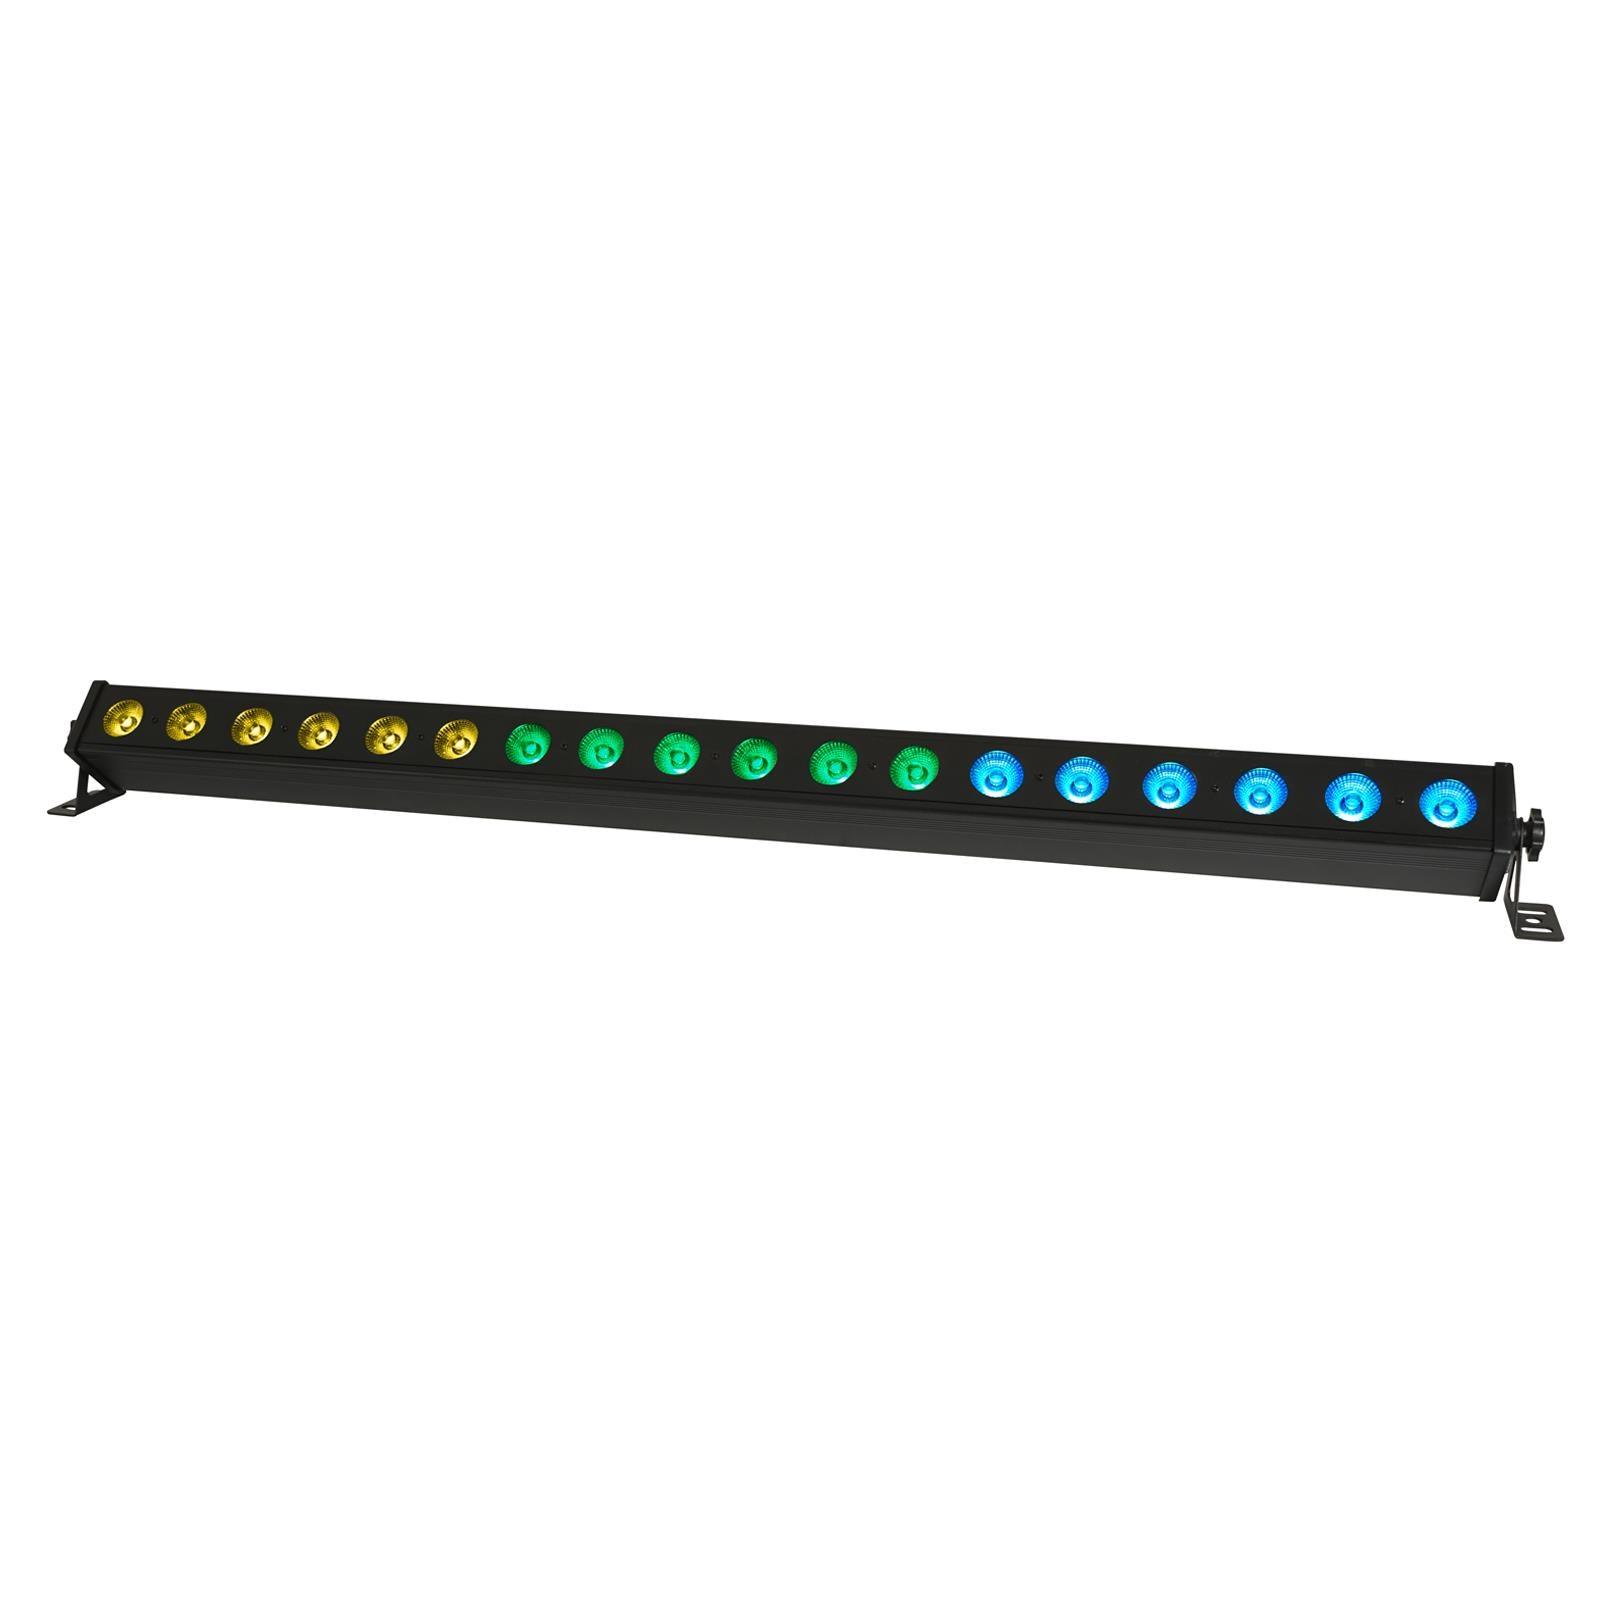 Equinox FXbar18 18 x 3w LED Colour Bar Batten - DY Pro Audio